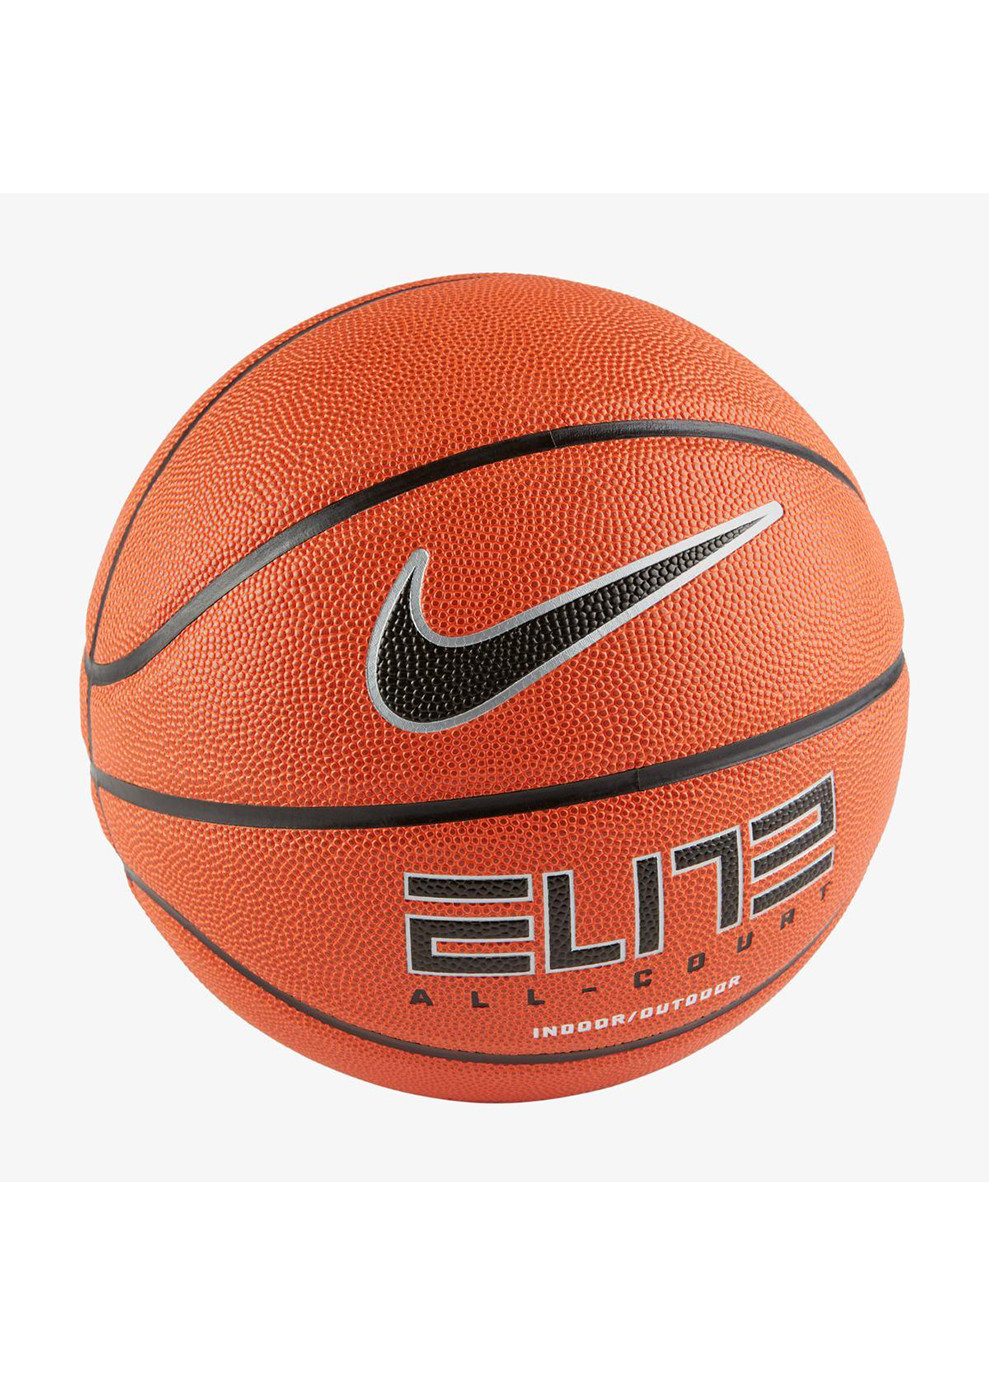 Мяч баскетбольный Elite All Court 8P 2.0 р. 7 Deflated Amber/Black/Metallic Nike (259296688)